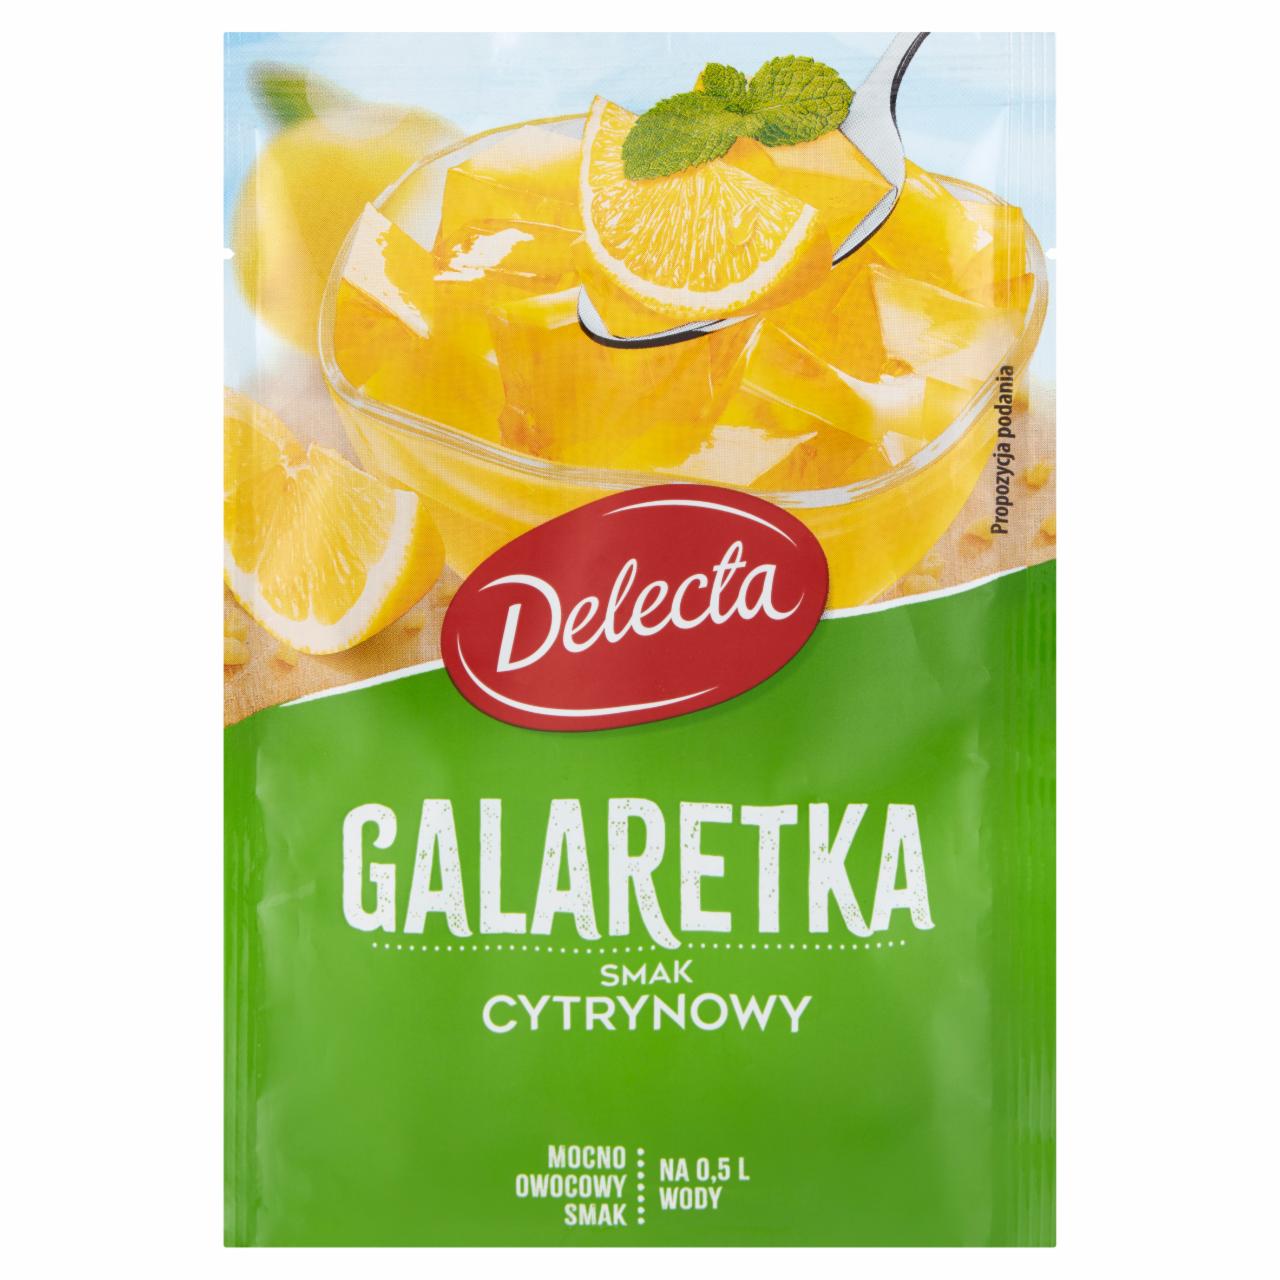 Zdjęcia - Delecta Galaretka smak cytrynowy 70 g